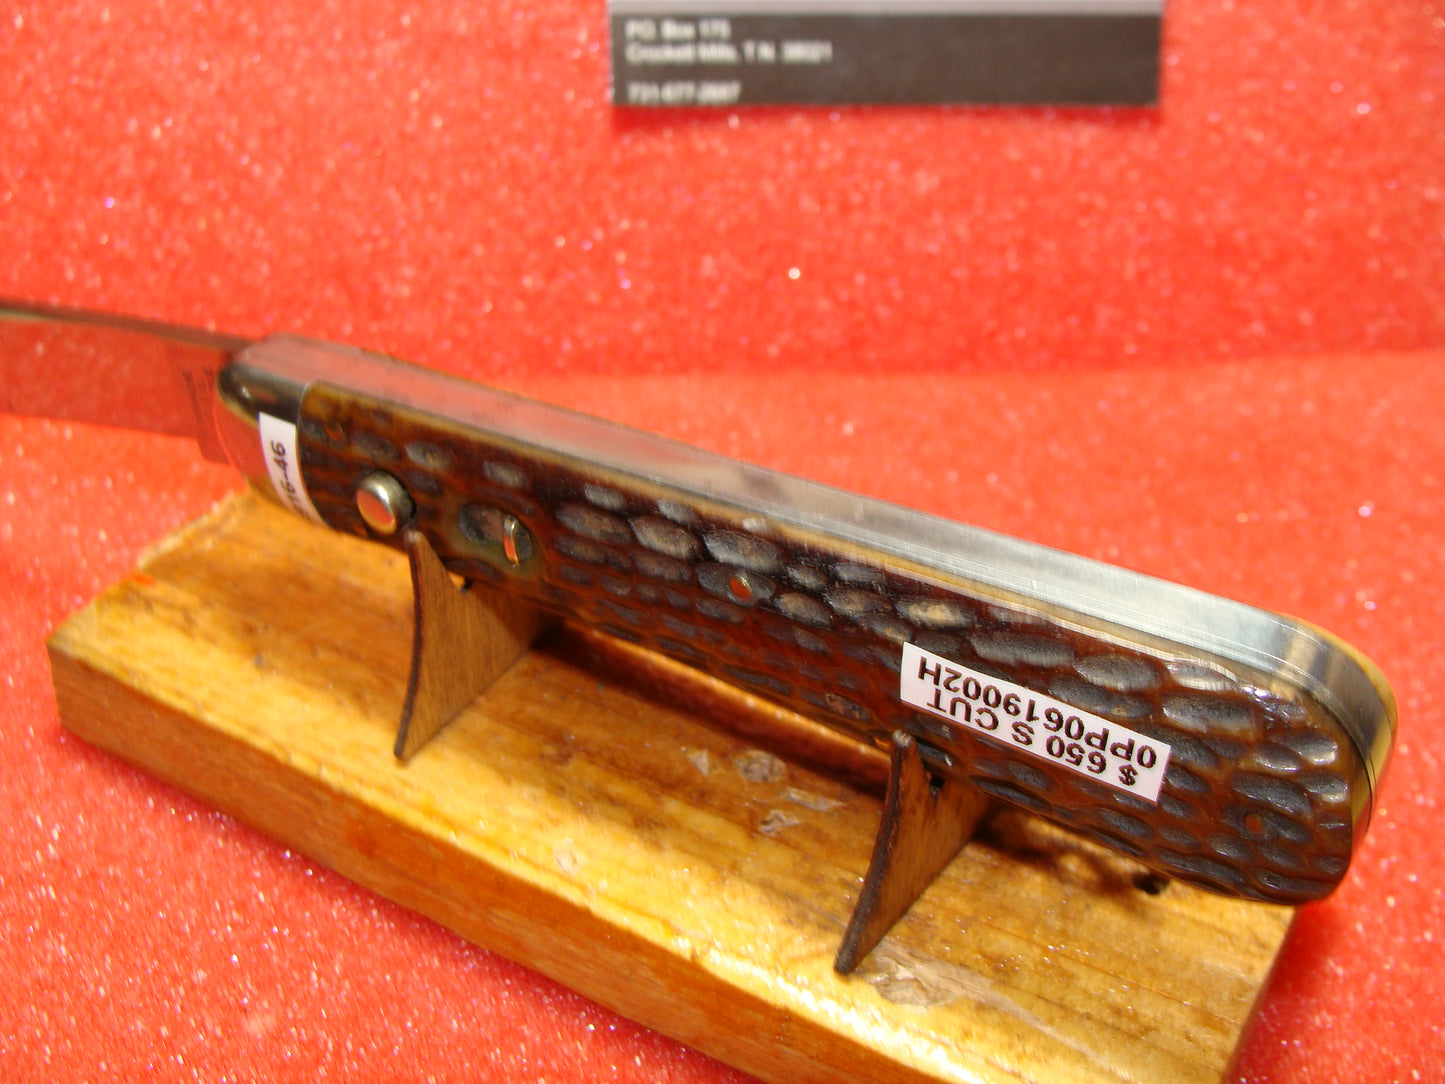 SCHRADE CUTLERY CO. WALDEN N.Y 1916-46 VINTAGE AMERICAN AUTOMATIC KNIFE 4 7/8" HUNTER BROWN BONE HANDLES